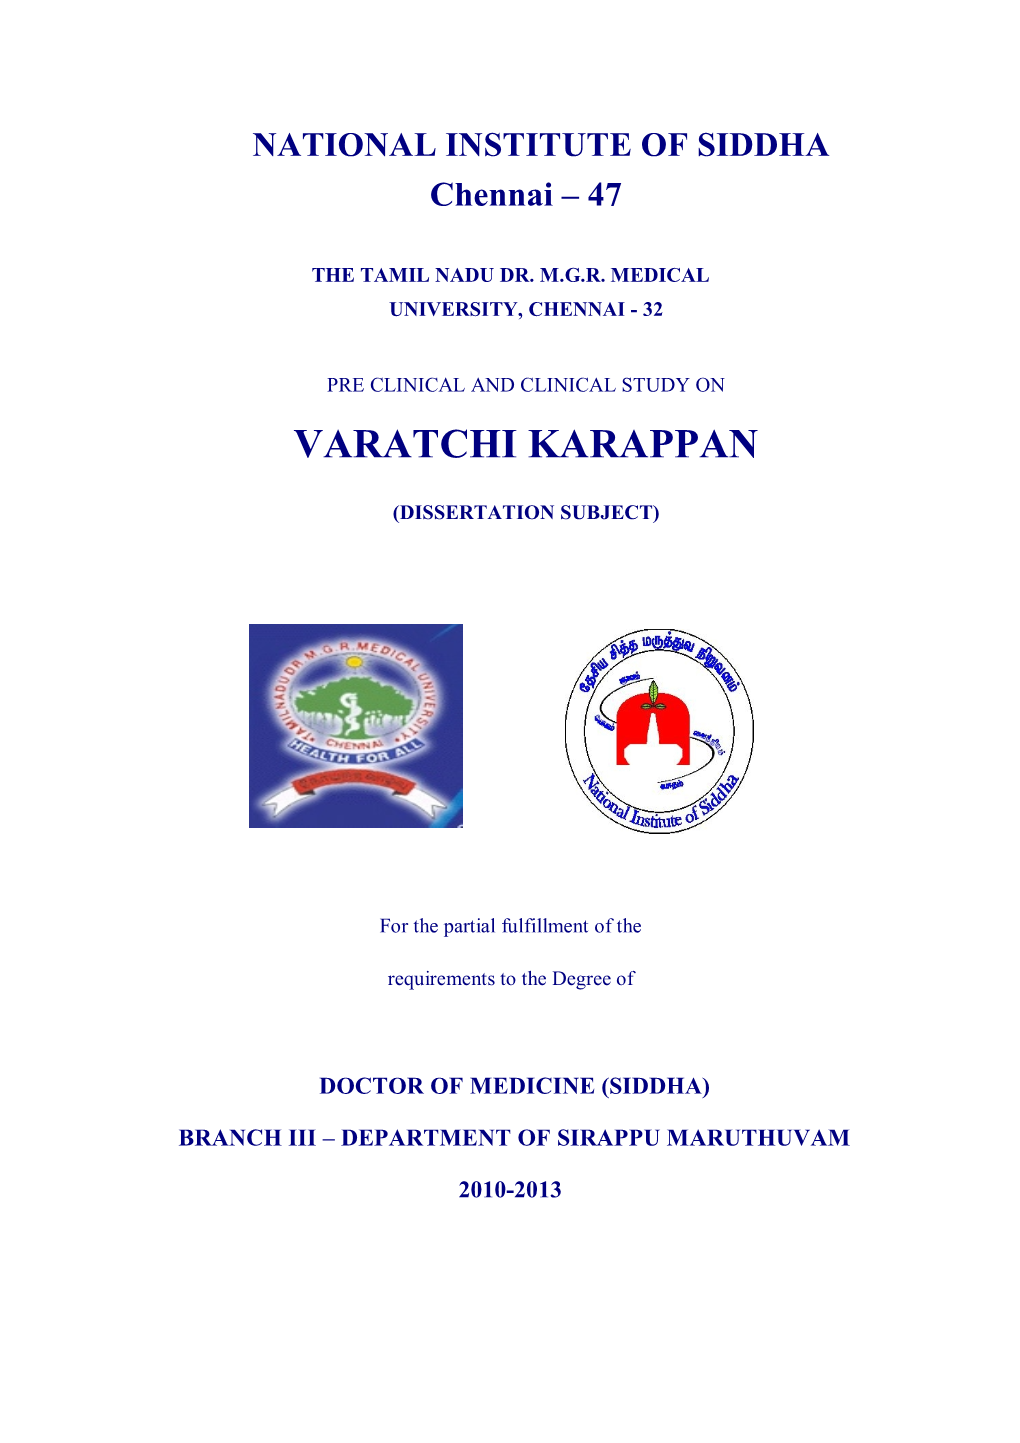 Varatchi Karappan